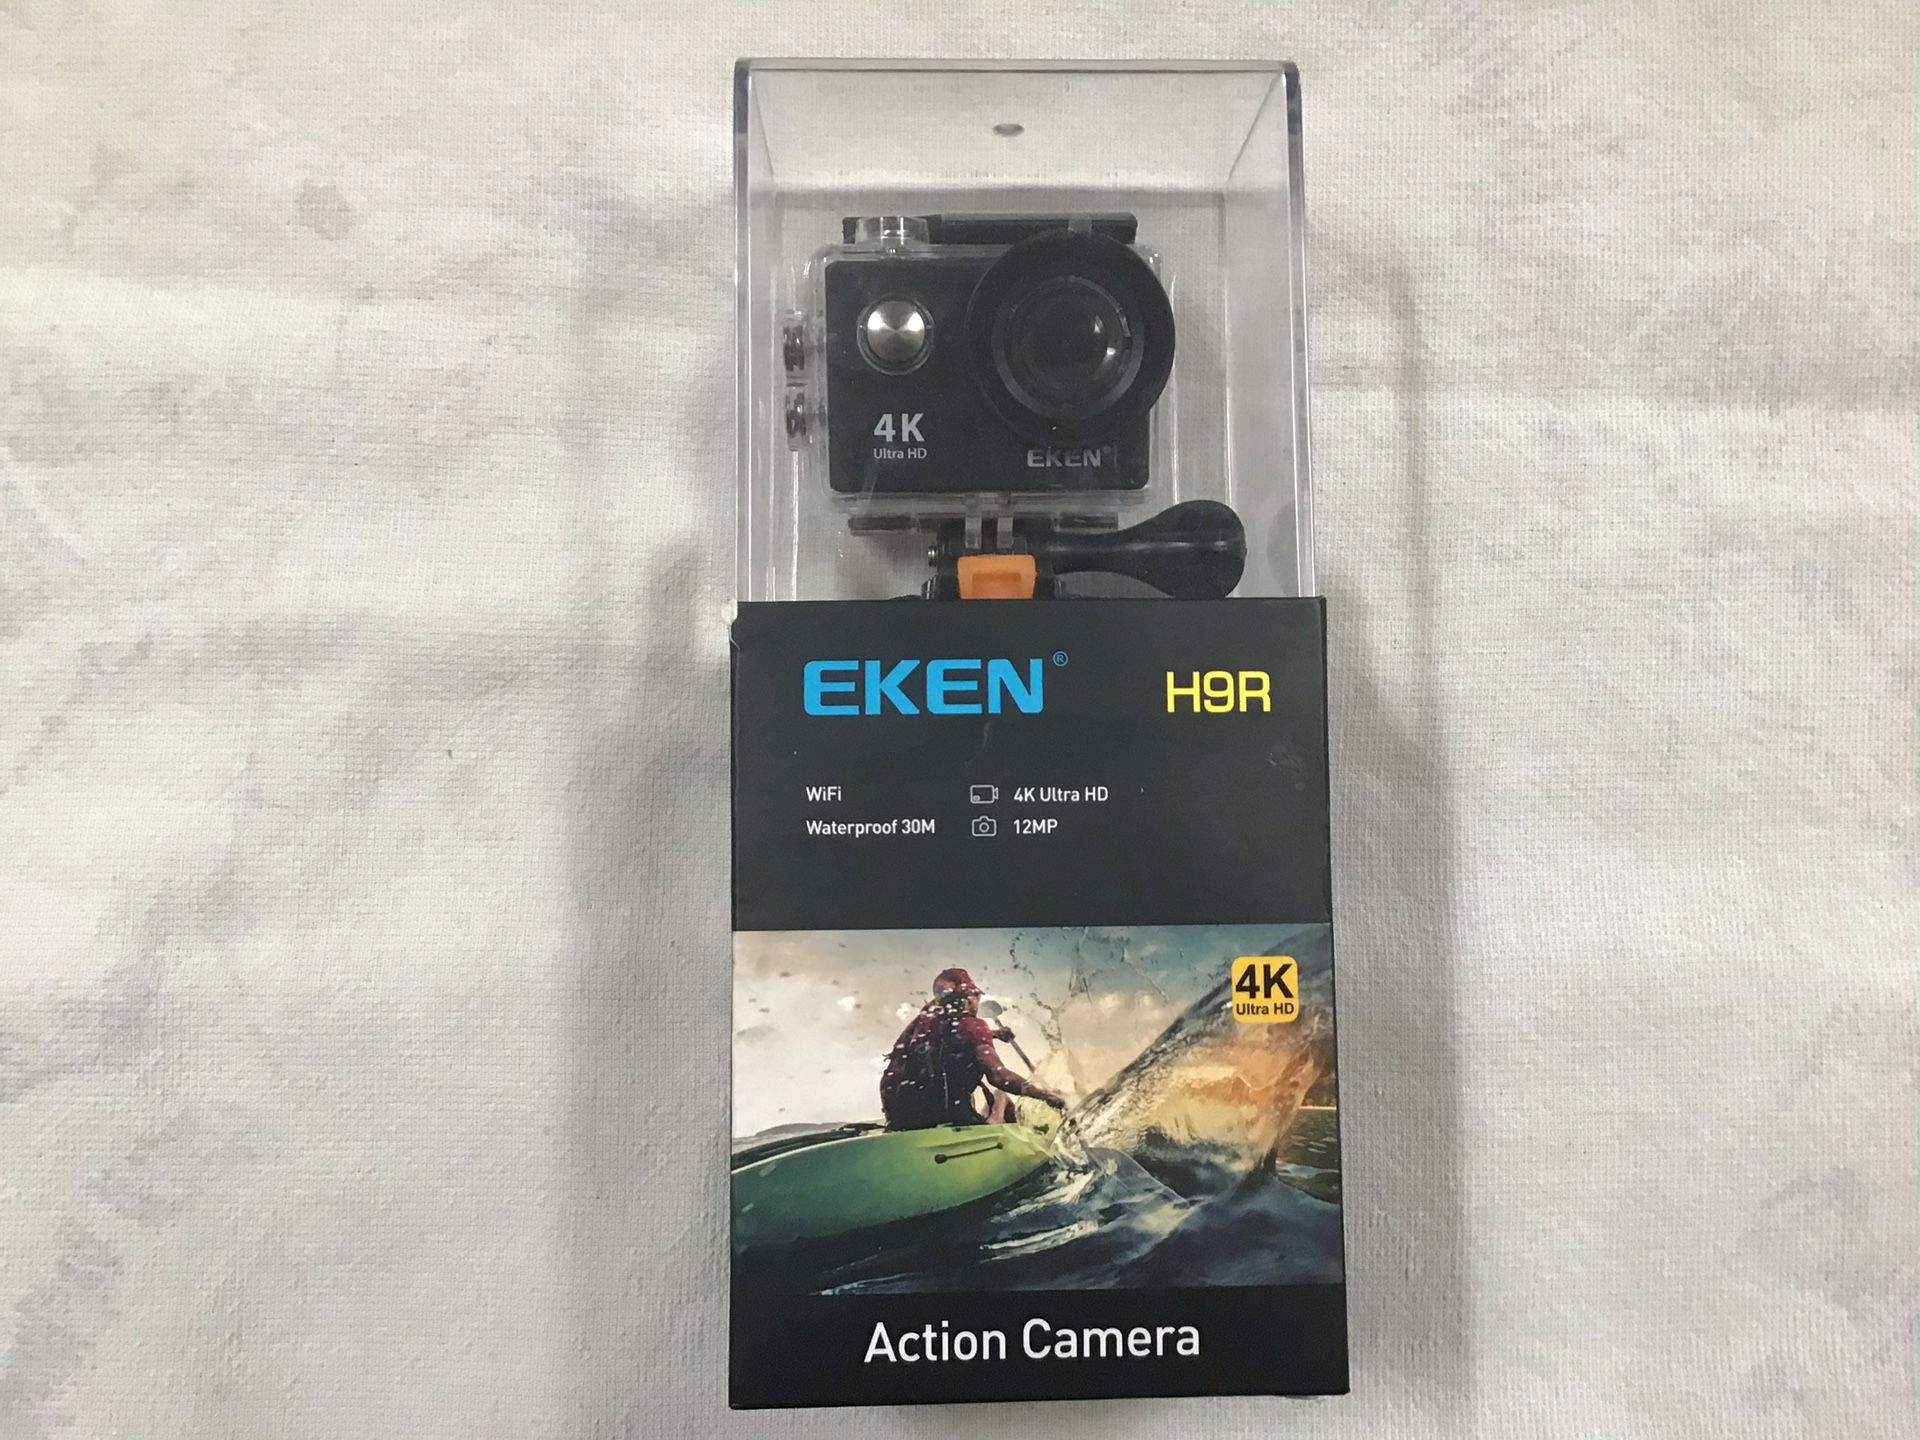 EKEN H9R action camera.